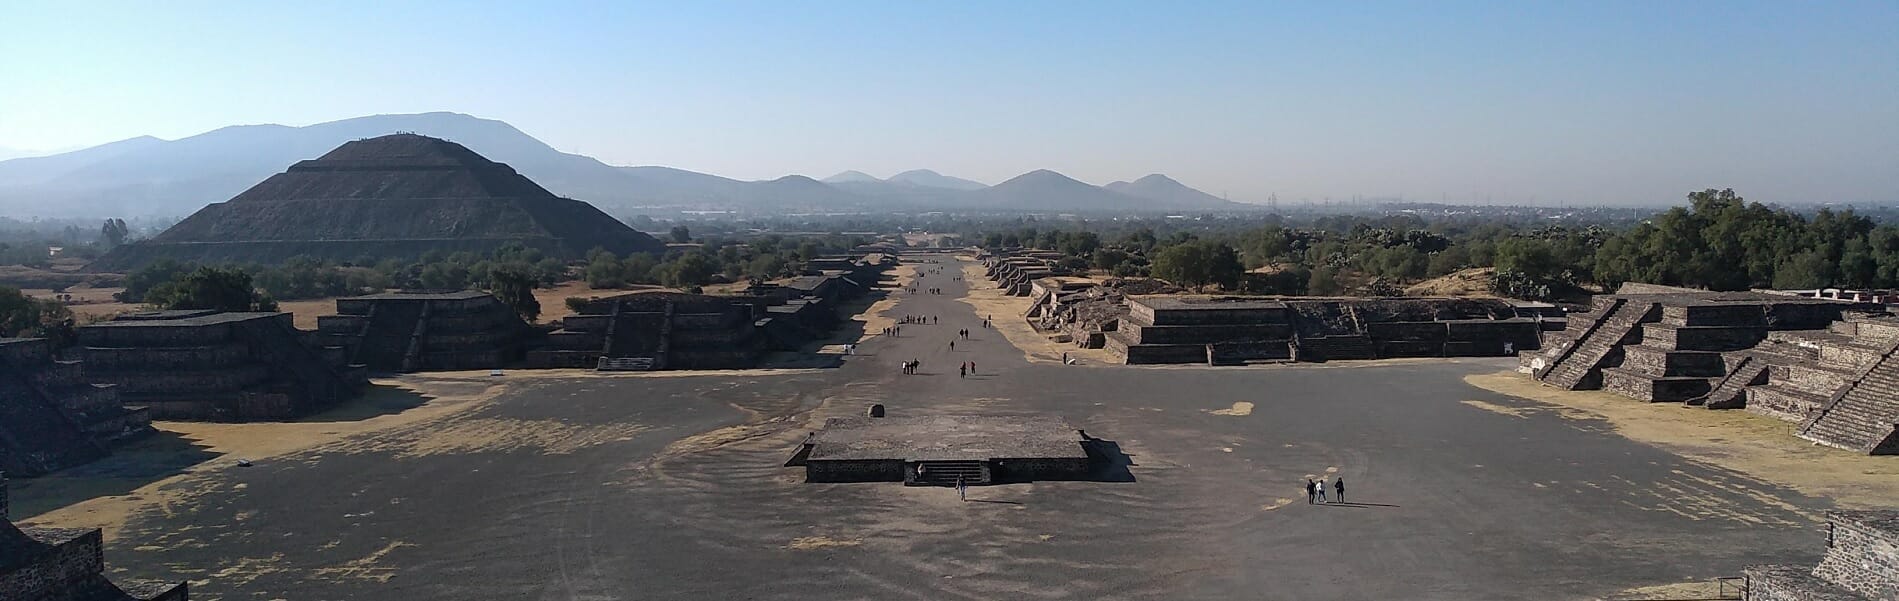 Teotihuacan ruin entire scenery